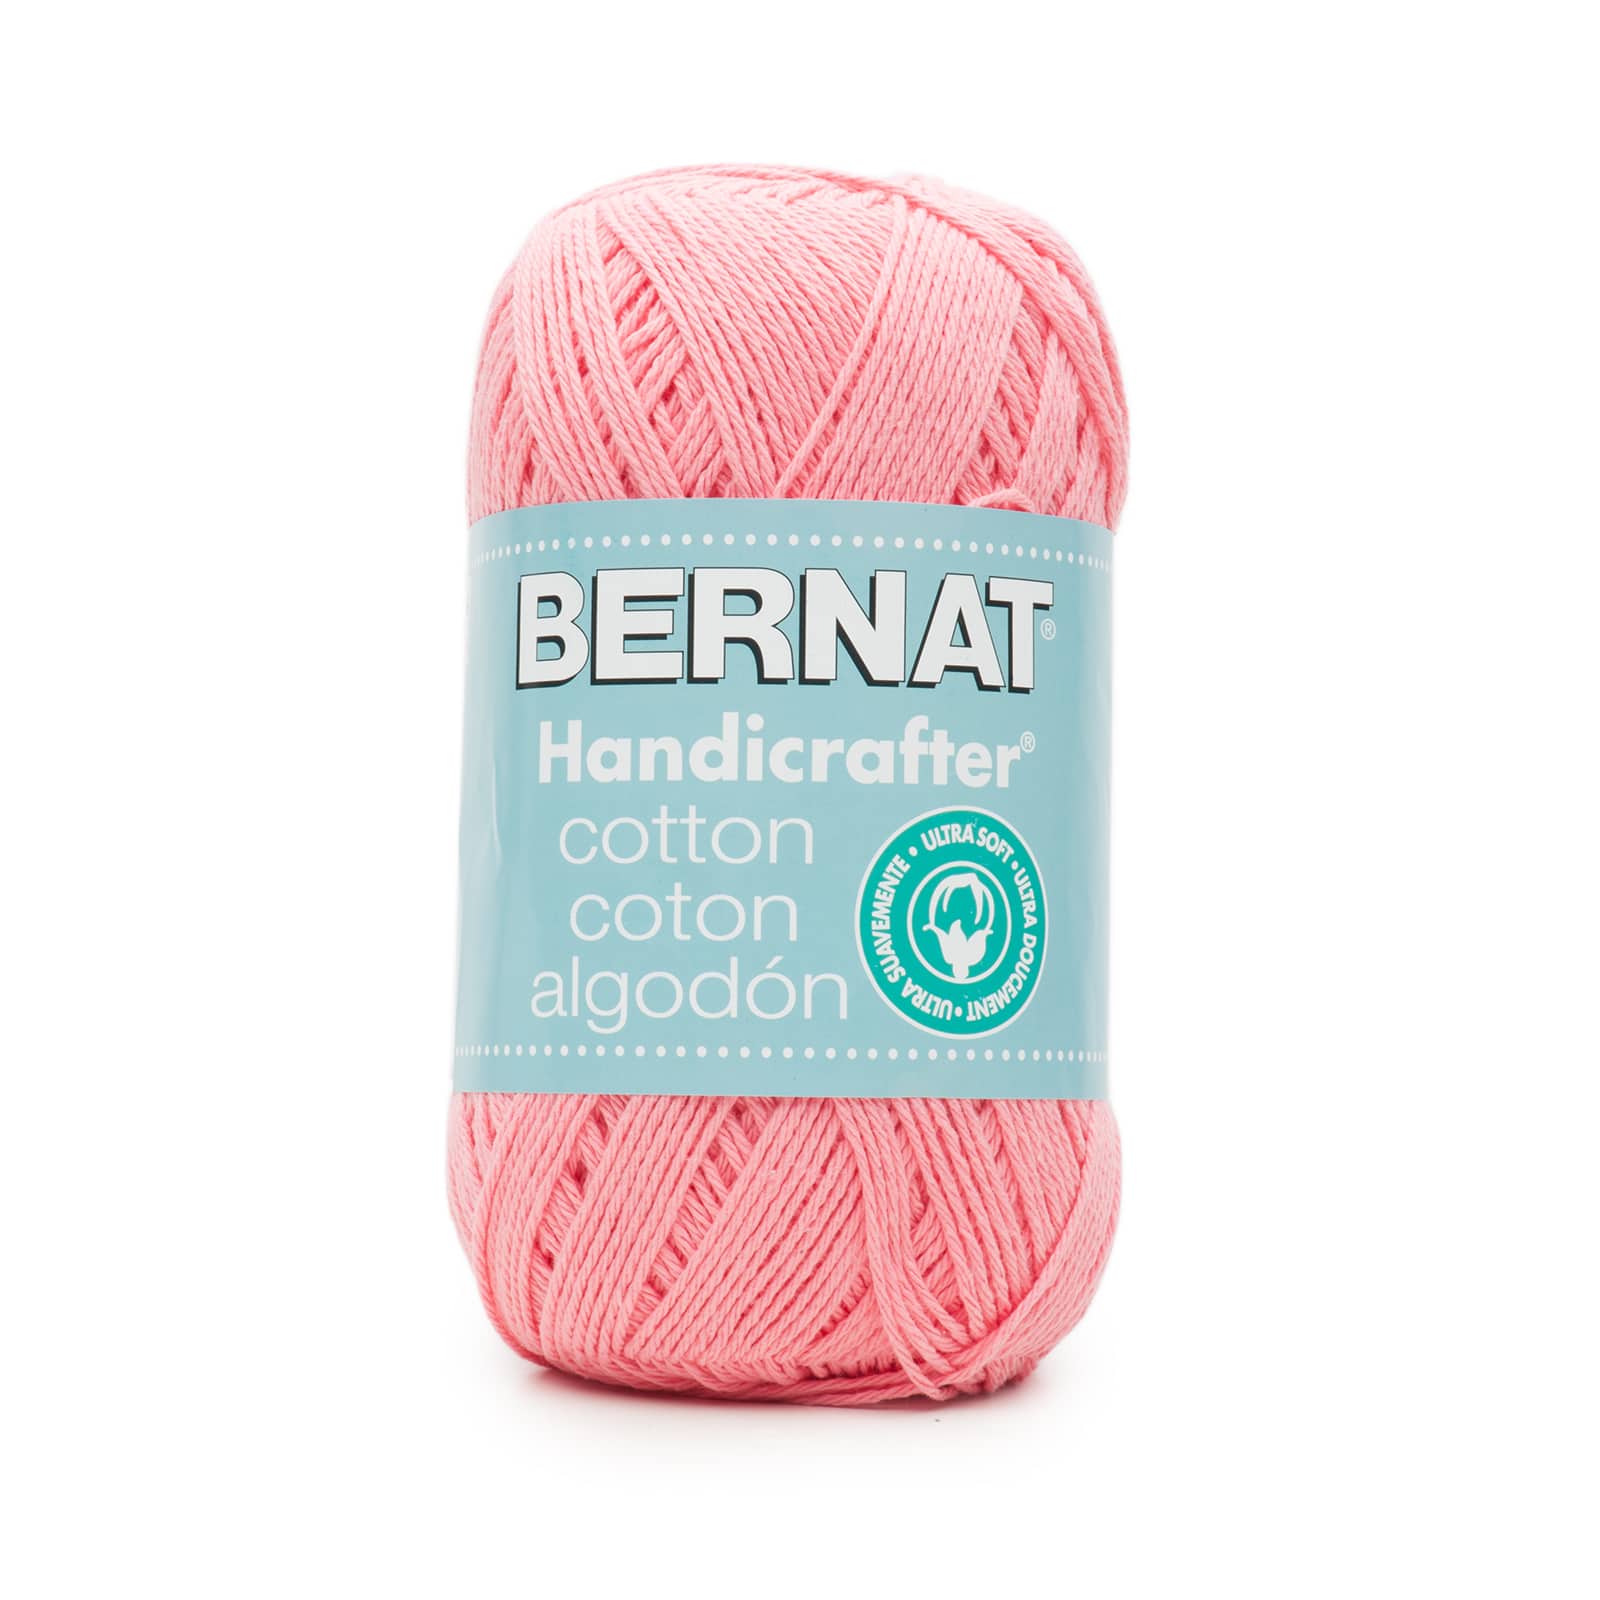 Bernat Handicrafter Cotton Yarn Solid